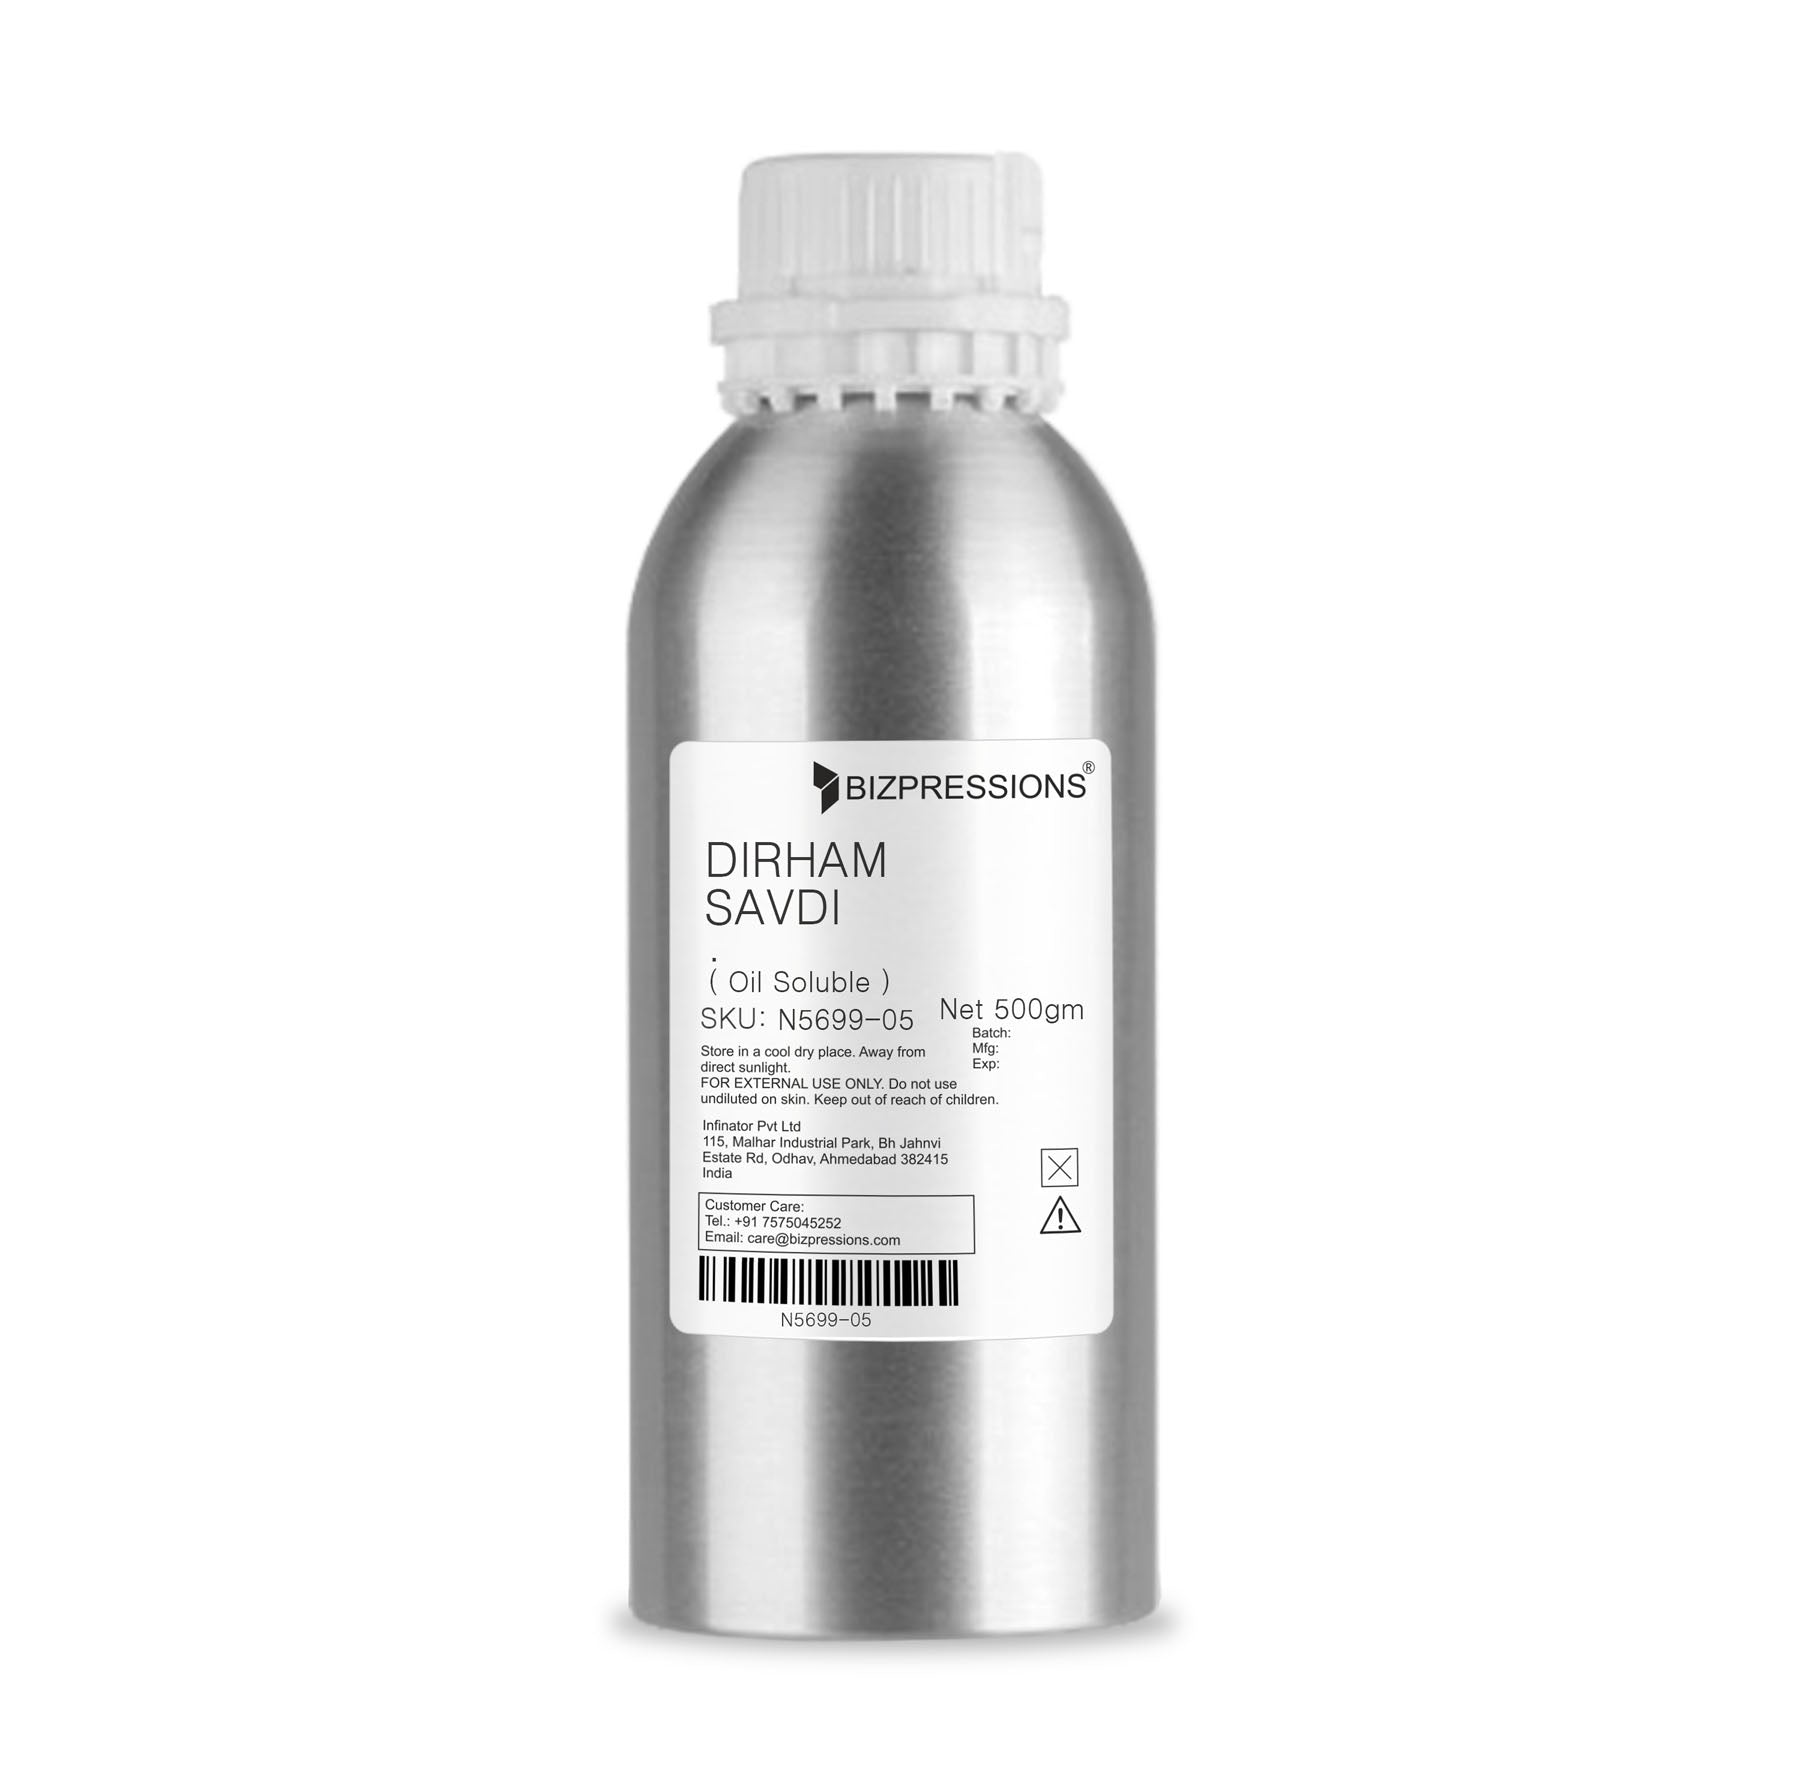 DIRHAM SAVDI - Fragrance ( Oil Soluble ) - 500 gm